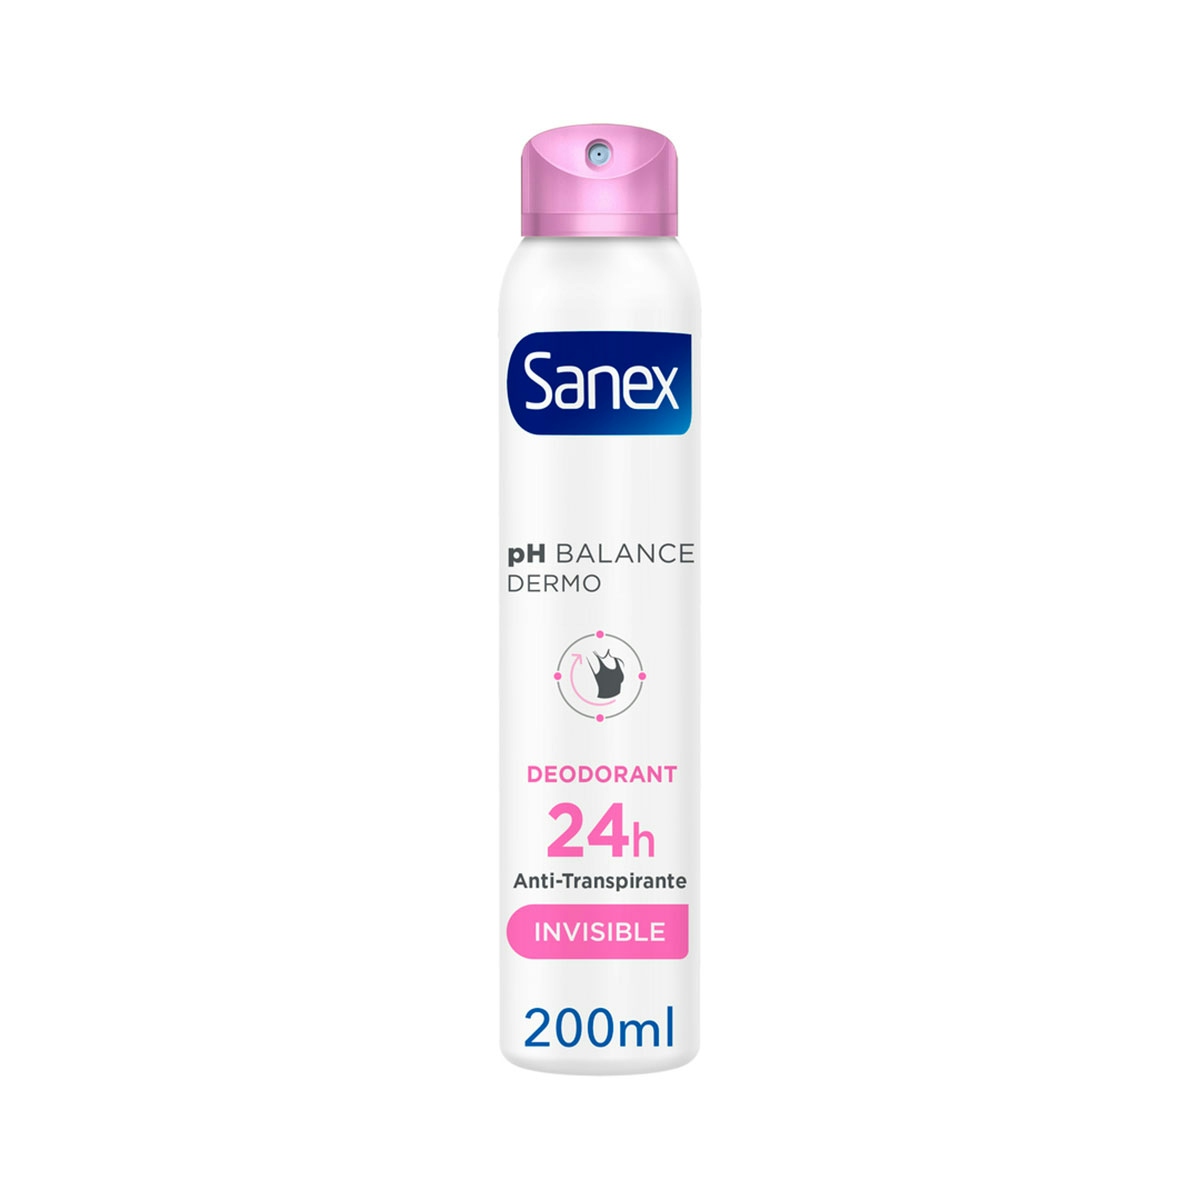 Desodorante spray Sanex pH Balance Dermo Invisible protección 24h 200ml